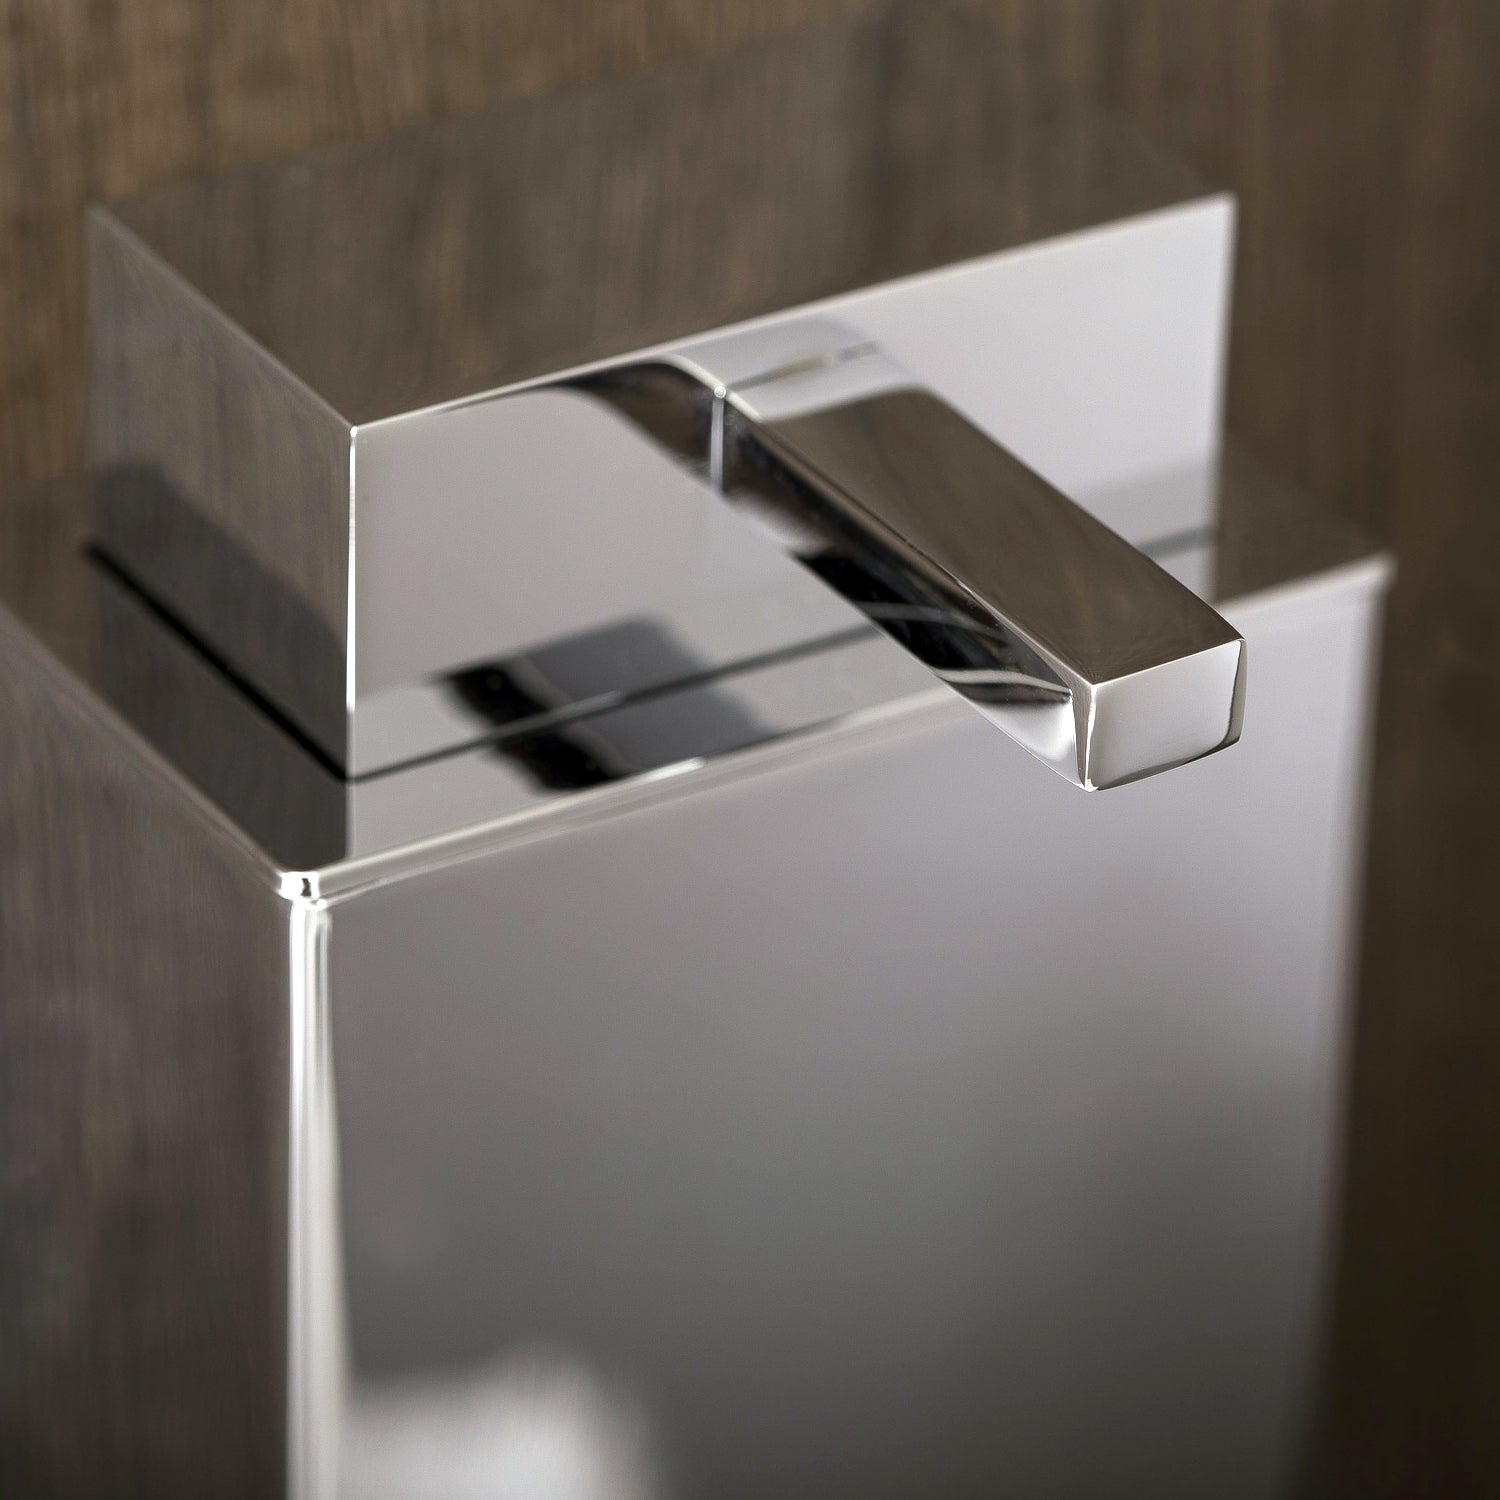 COSMIC Bathlife Soap Dispenser, Wall Mount, Brass Body, Chrome Finish, 2-7/16 x 7-3/16 x 4-3/16 Inches (2290105)